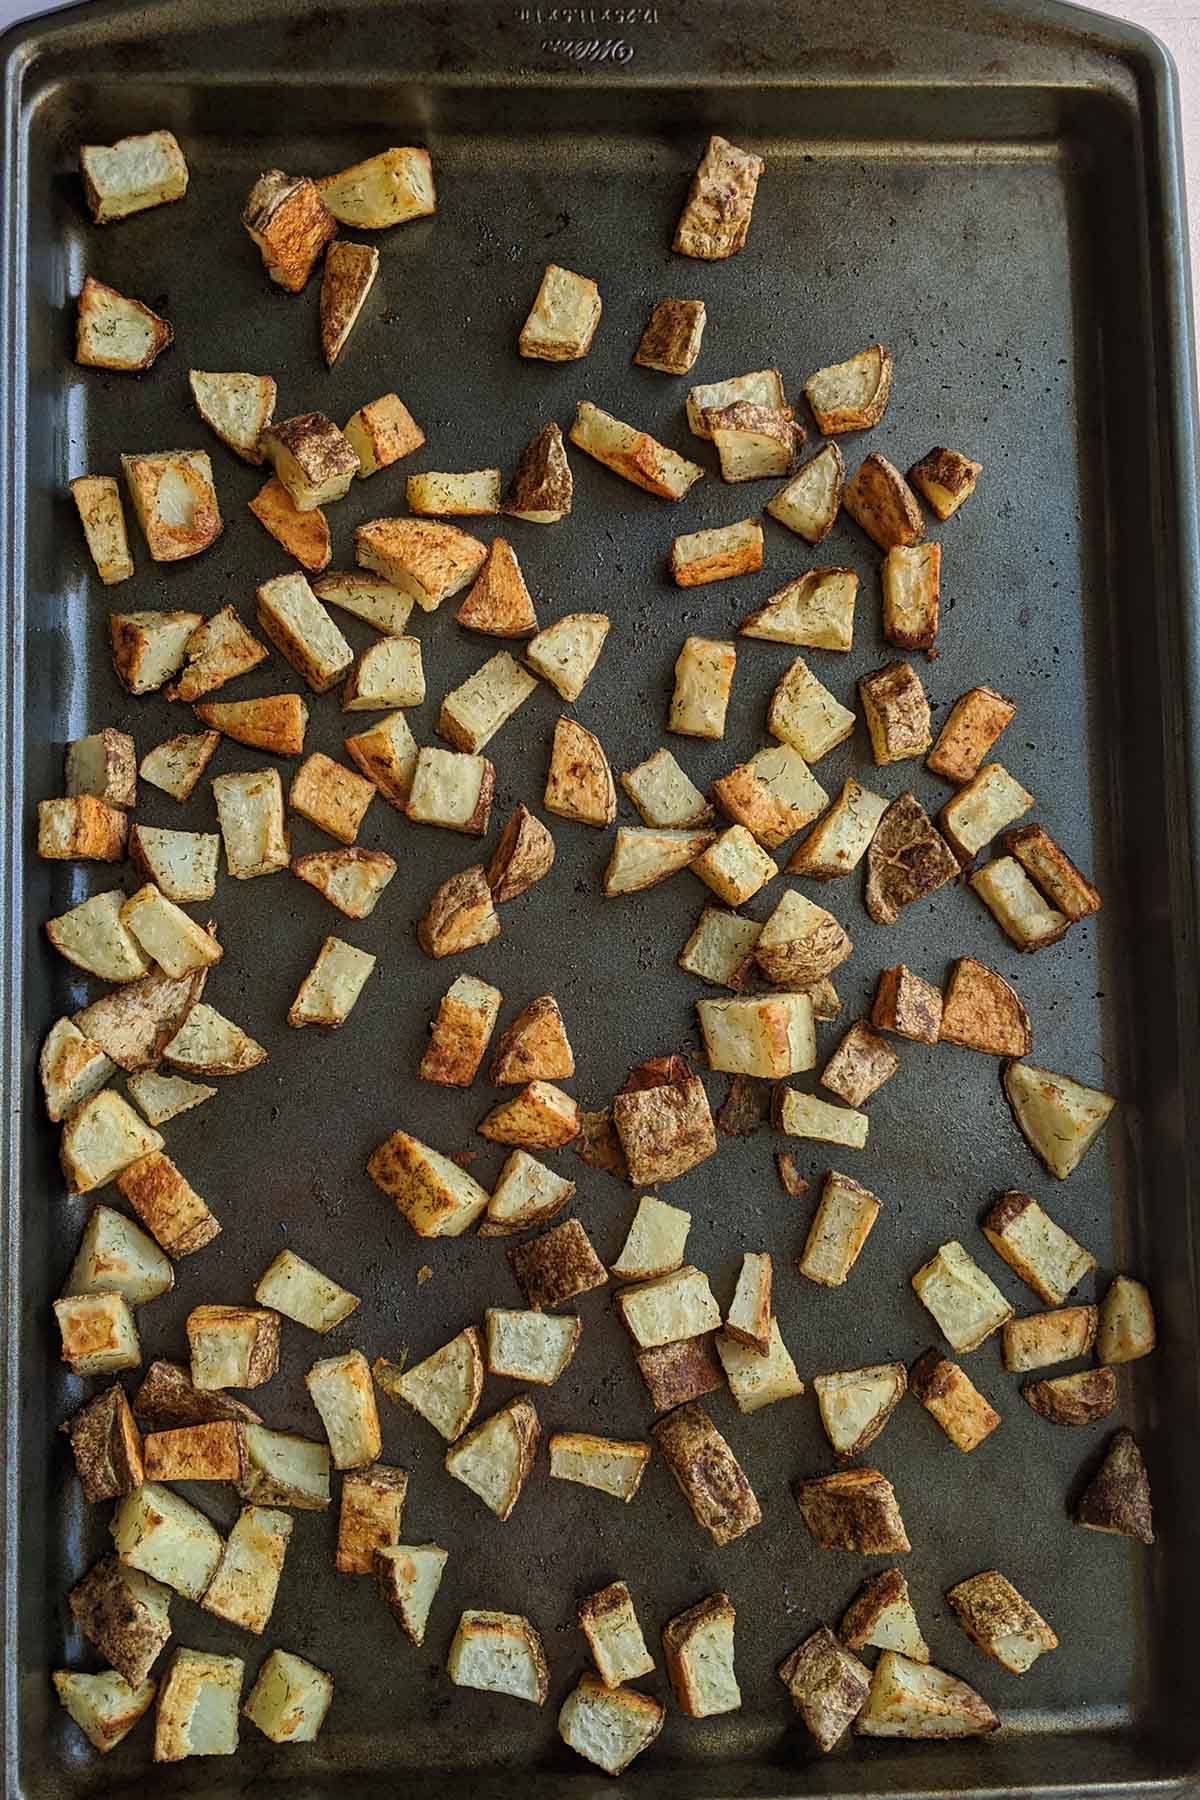 roasted russet potatoes on a sheet pan.